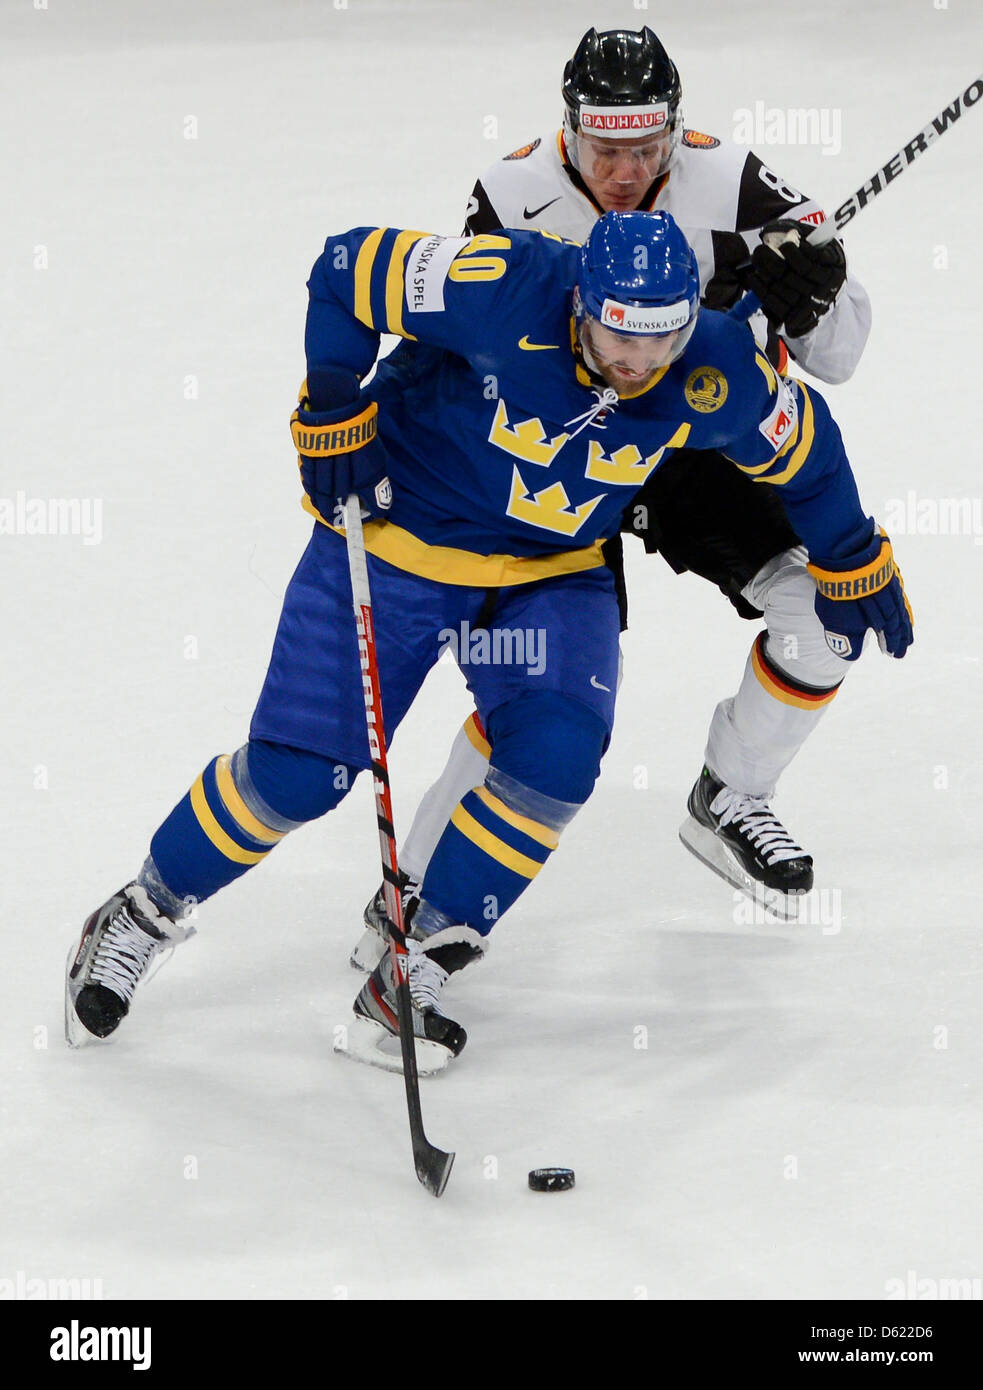 Henrik Zetterberg, Ice Hockey Wiki